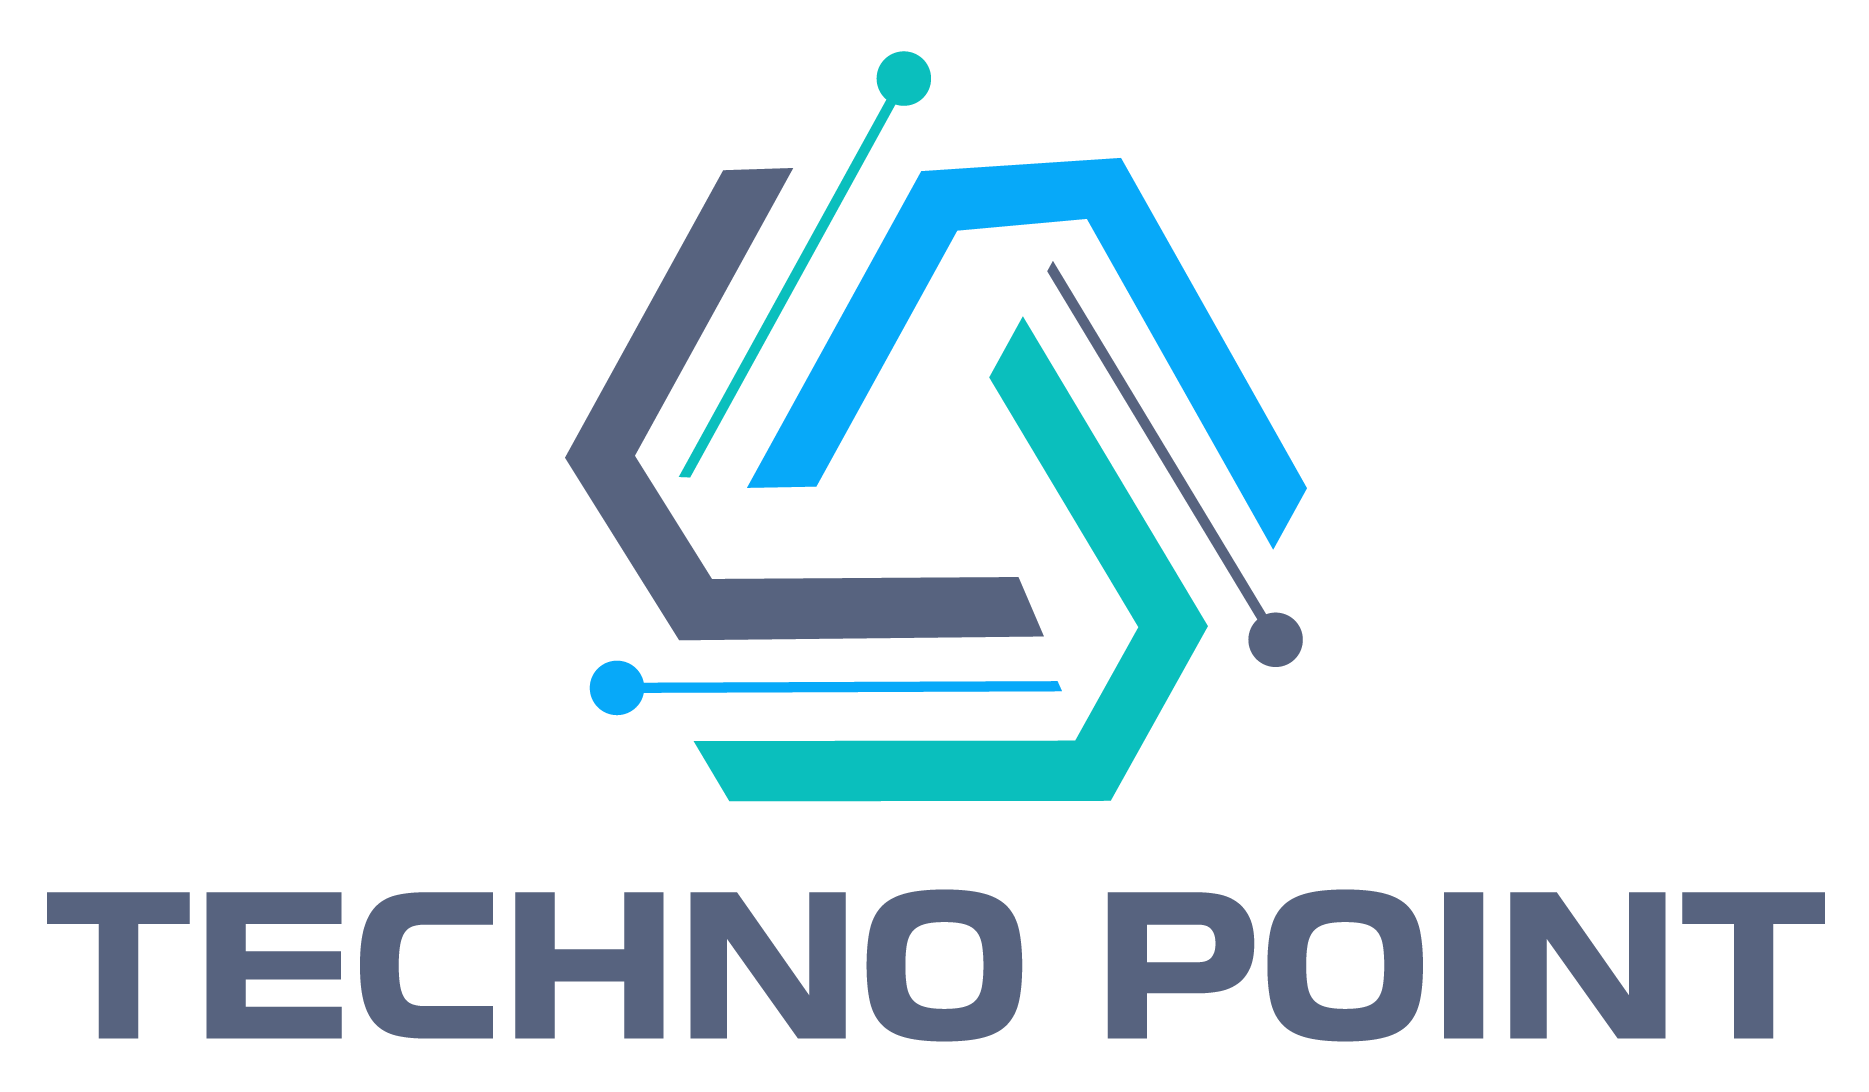 Techno Point